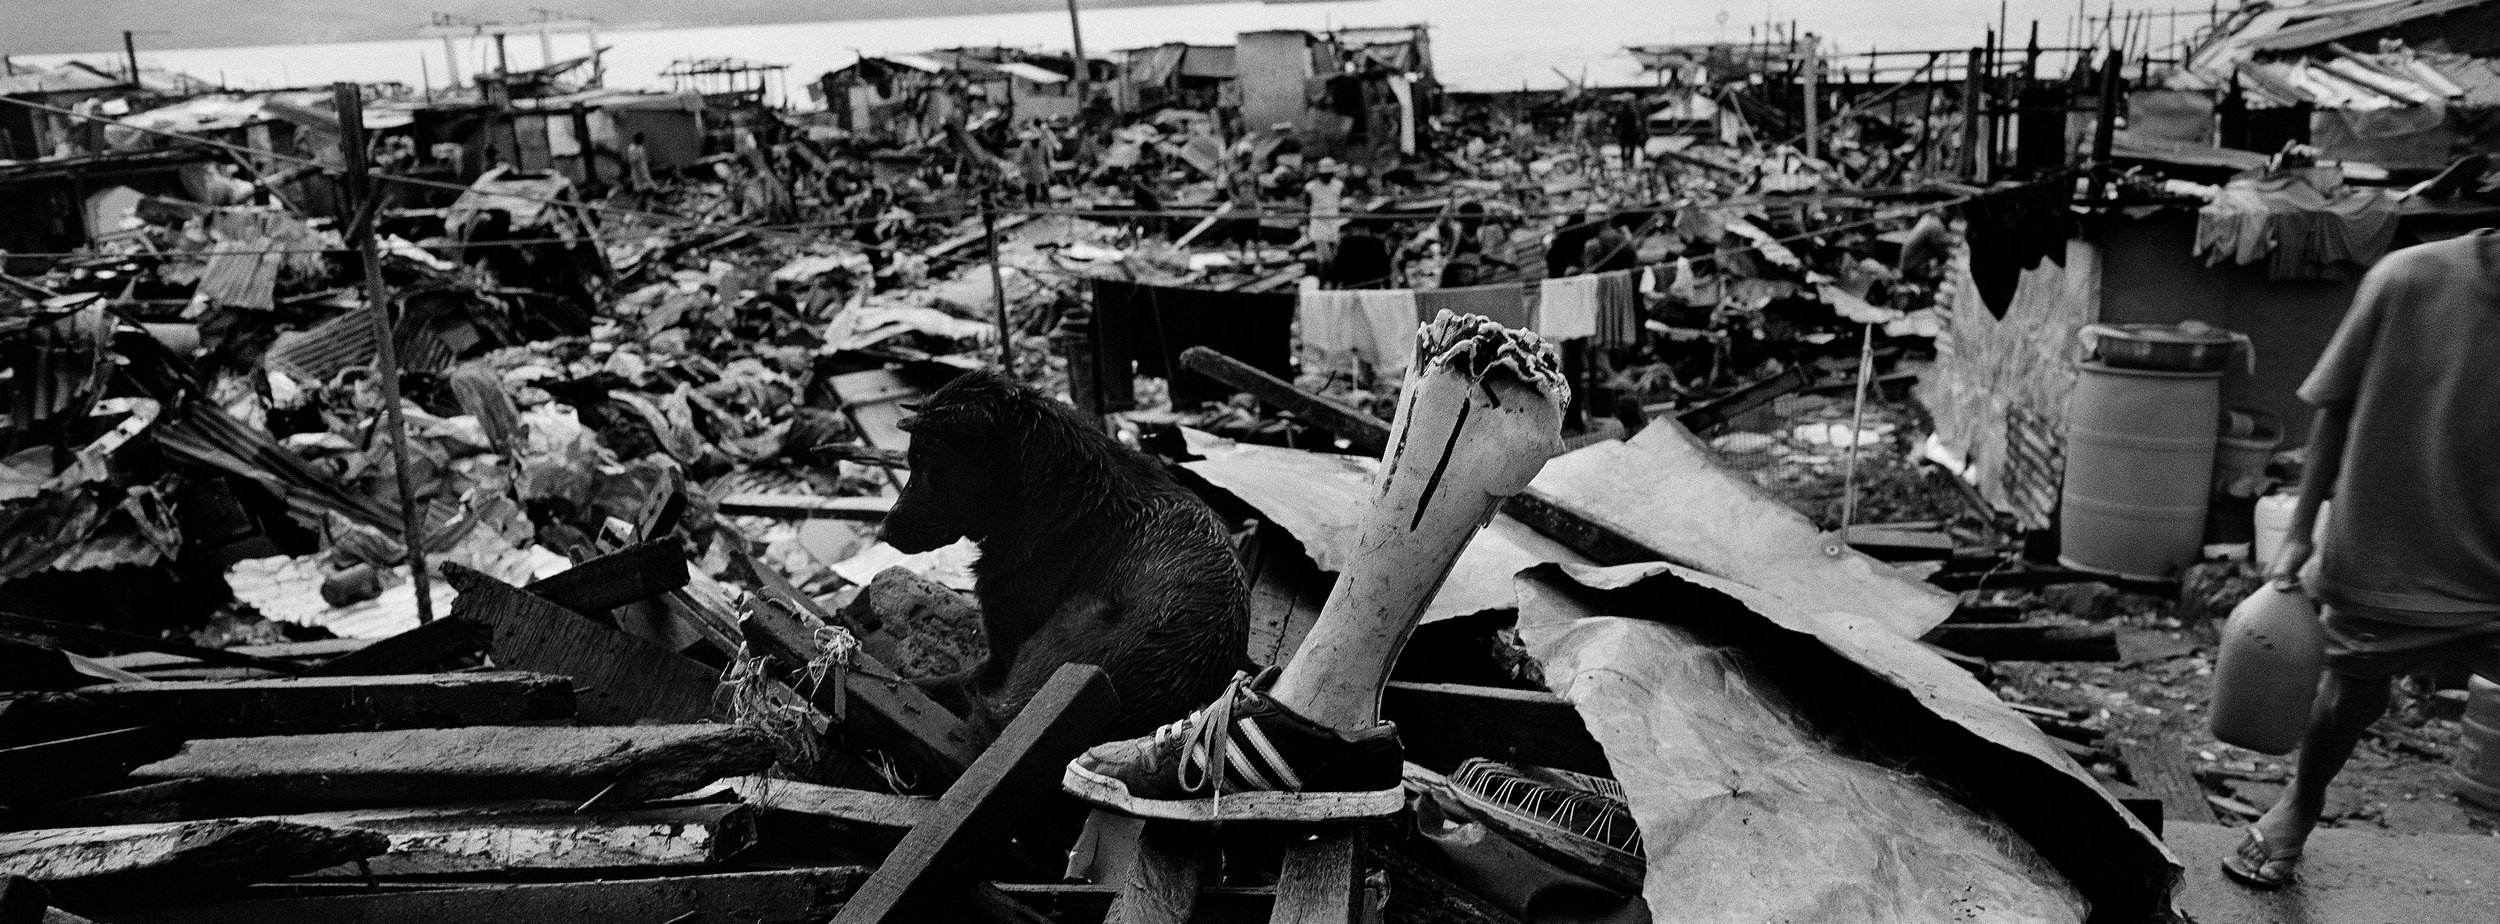 ©Stephen Dupont - Typhoon Haiyan 2013 - 4073 #15-16_Dogs.jpg